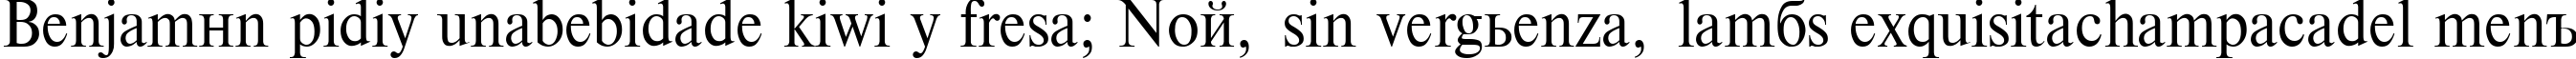 Пример написания шрифтом TimesET 90 текста на испанском